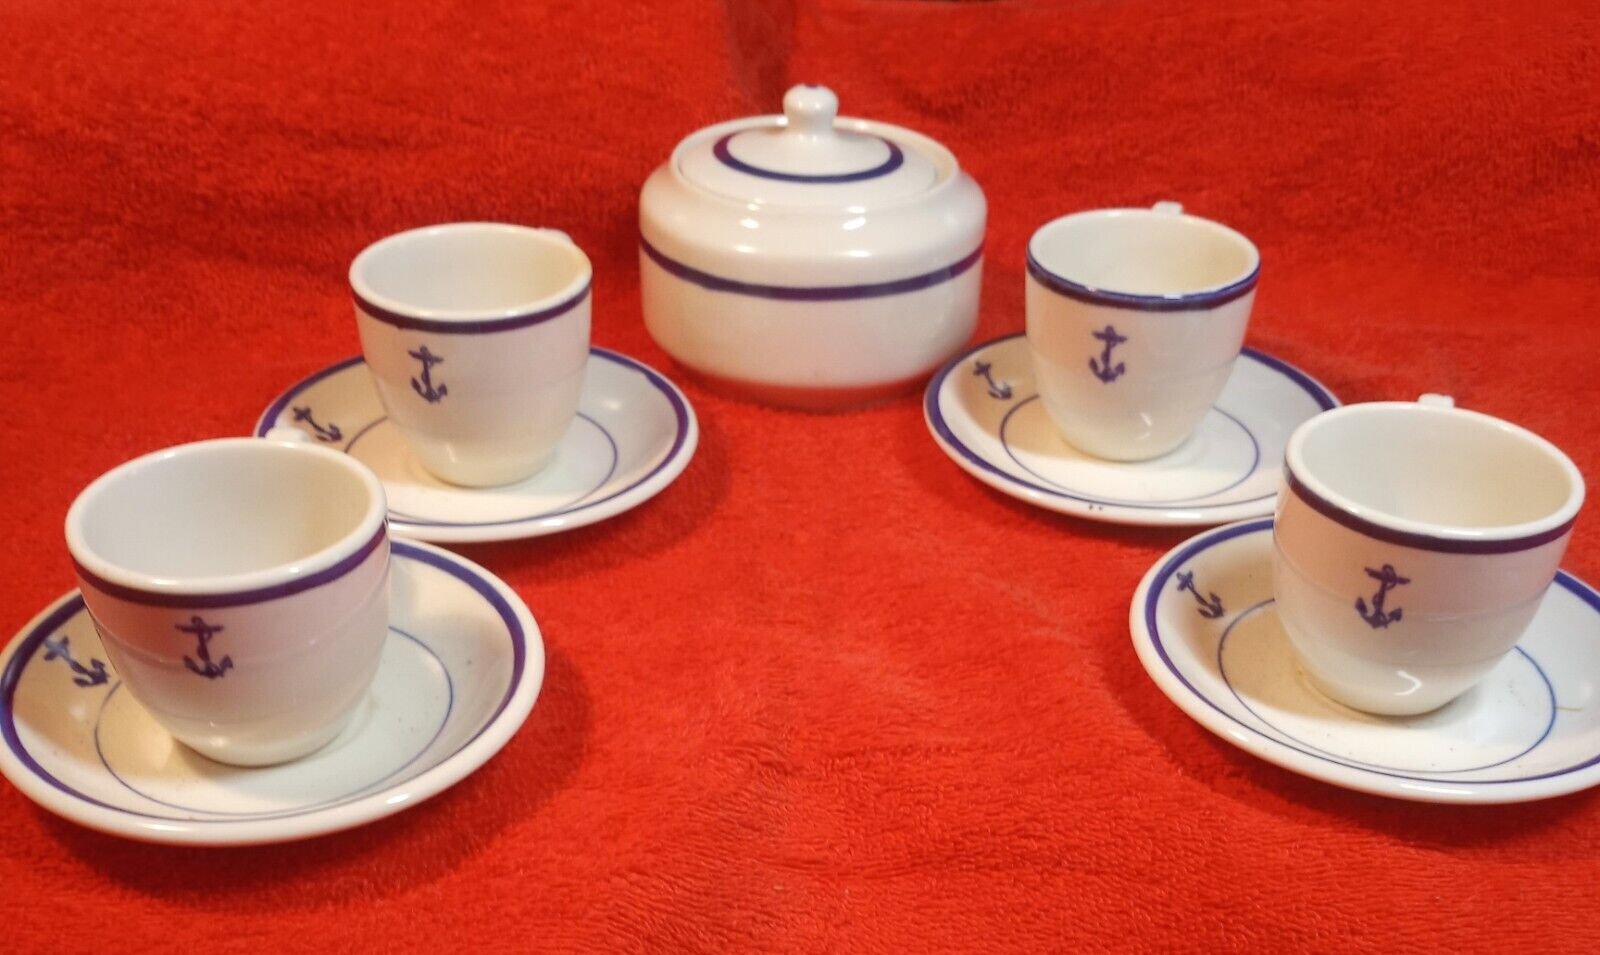 Shenango U.S. NAVY White Blue Anchor  Demitasse cup and saucer set of 4